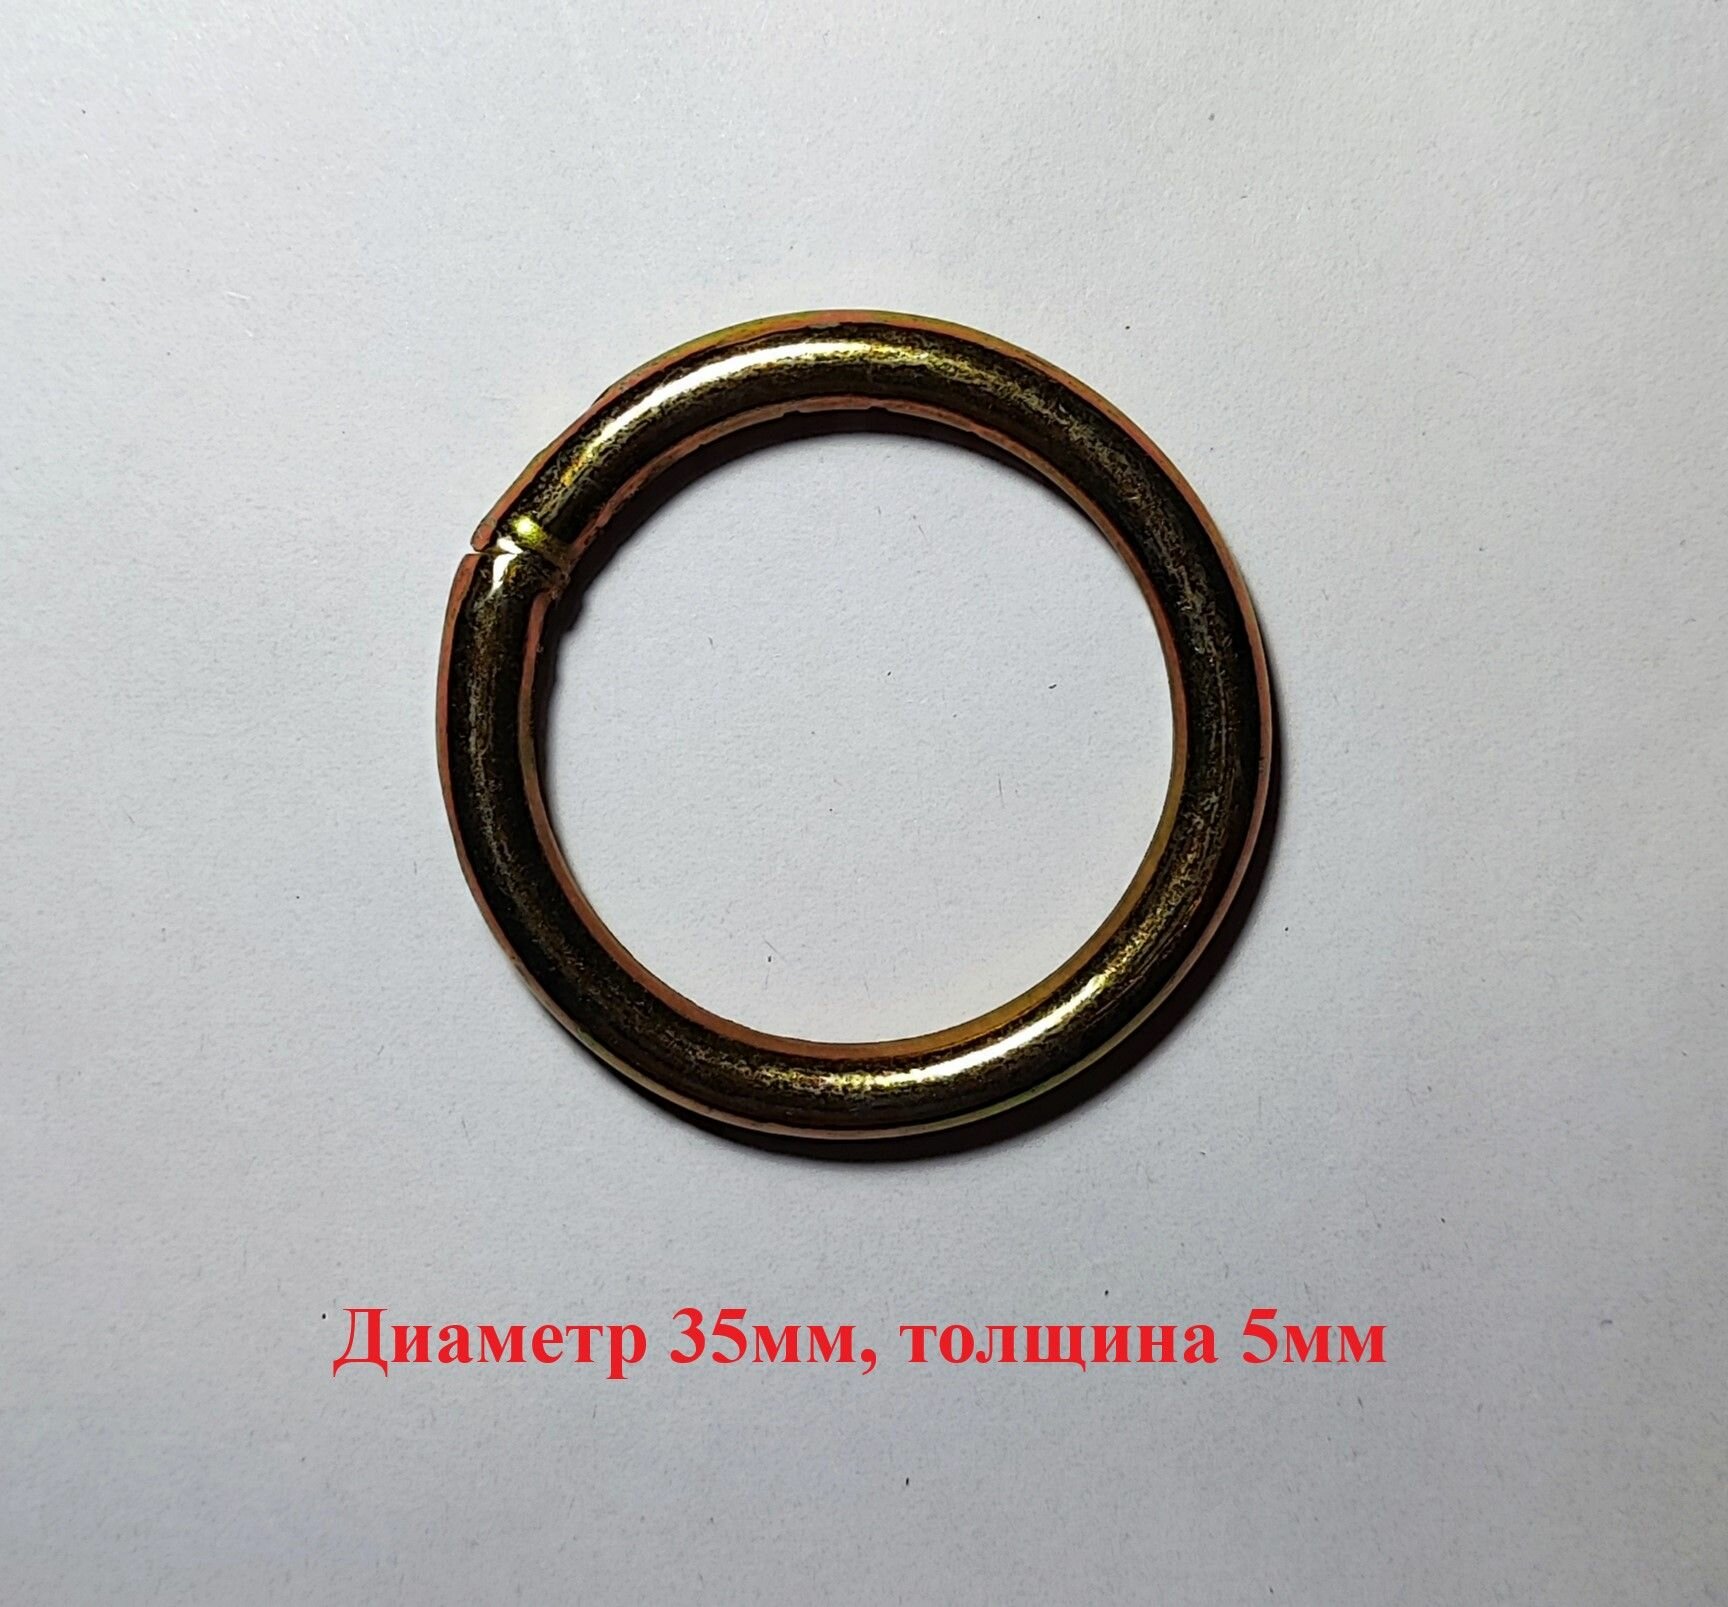 Кольцо сварное, диаметр 35мм, толщина 5мм, комплект 5шт.